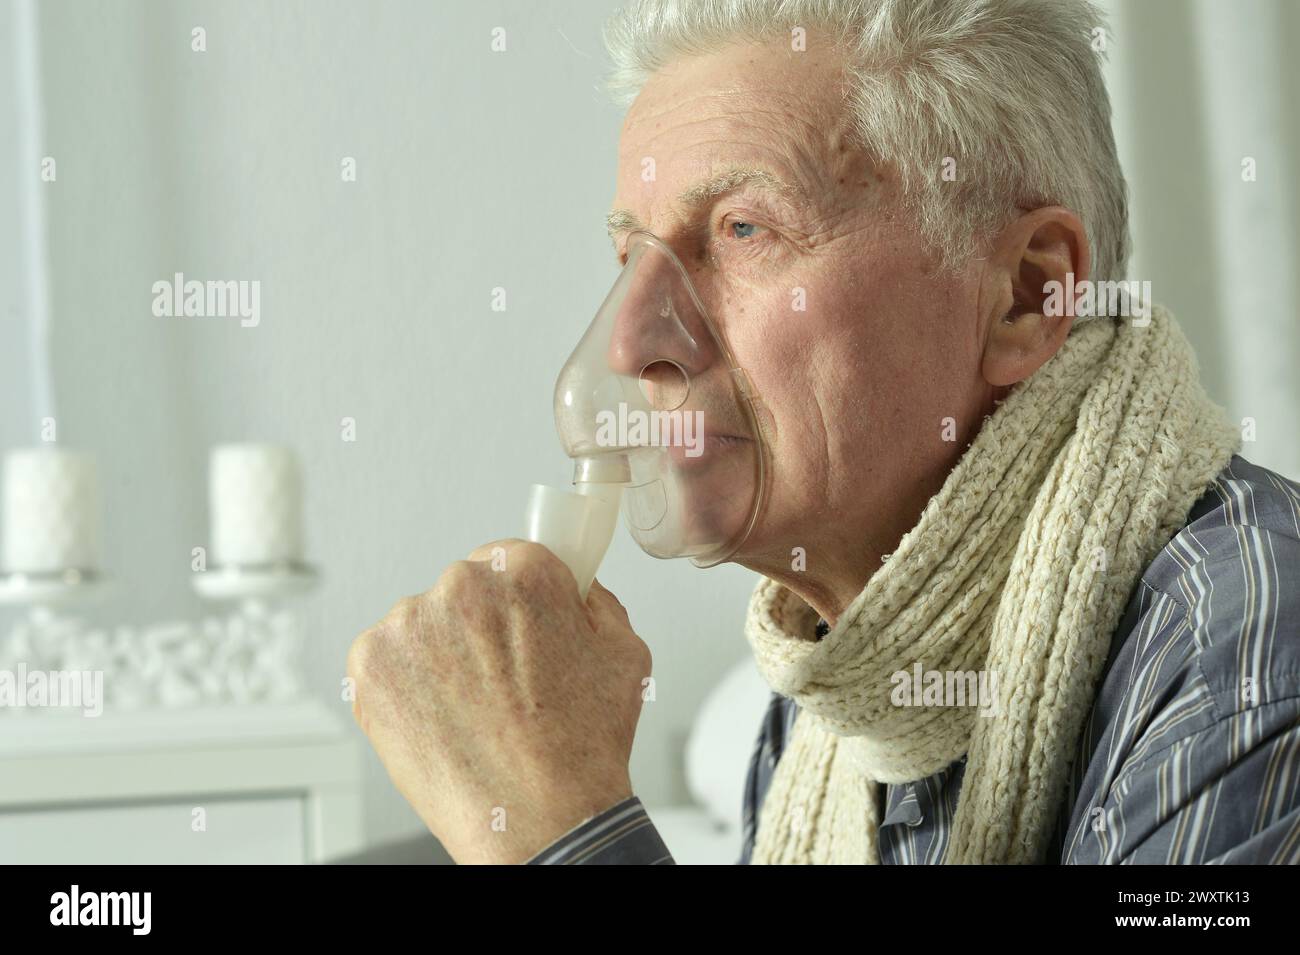 An elderly man is sick and uses an inhaler Stock Photo